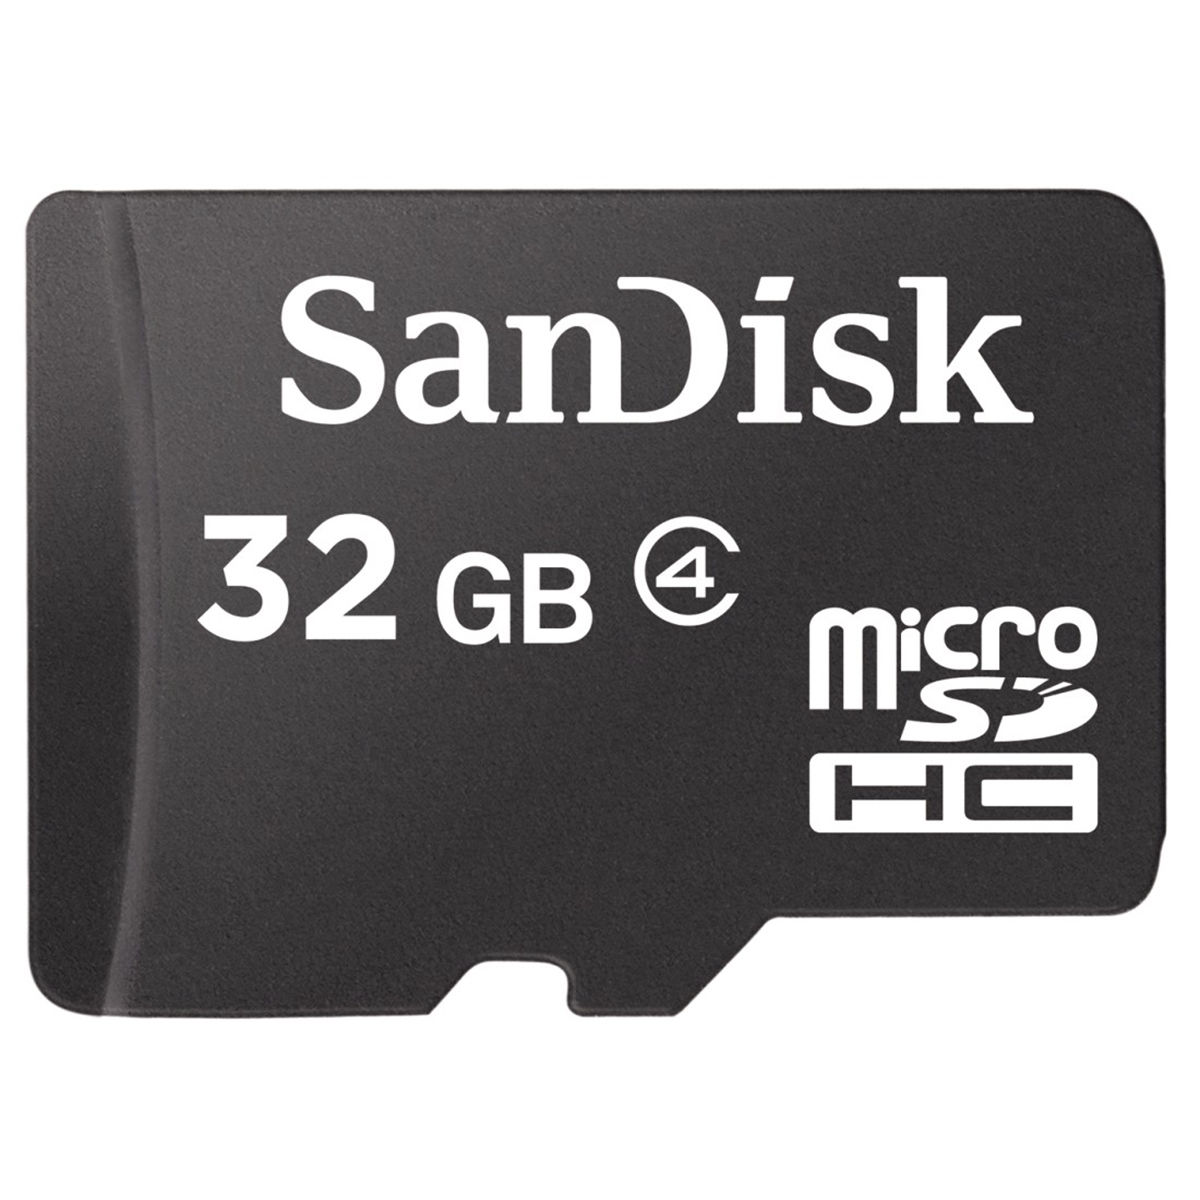 Sandisk - Geheugenkaart micro SDHC 32GB (104374)